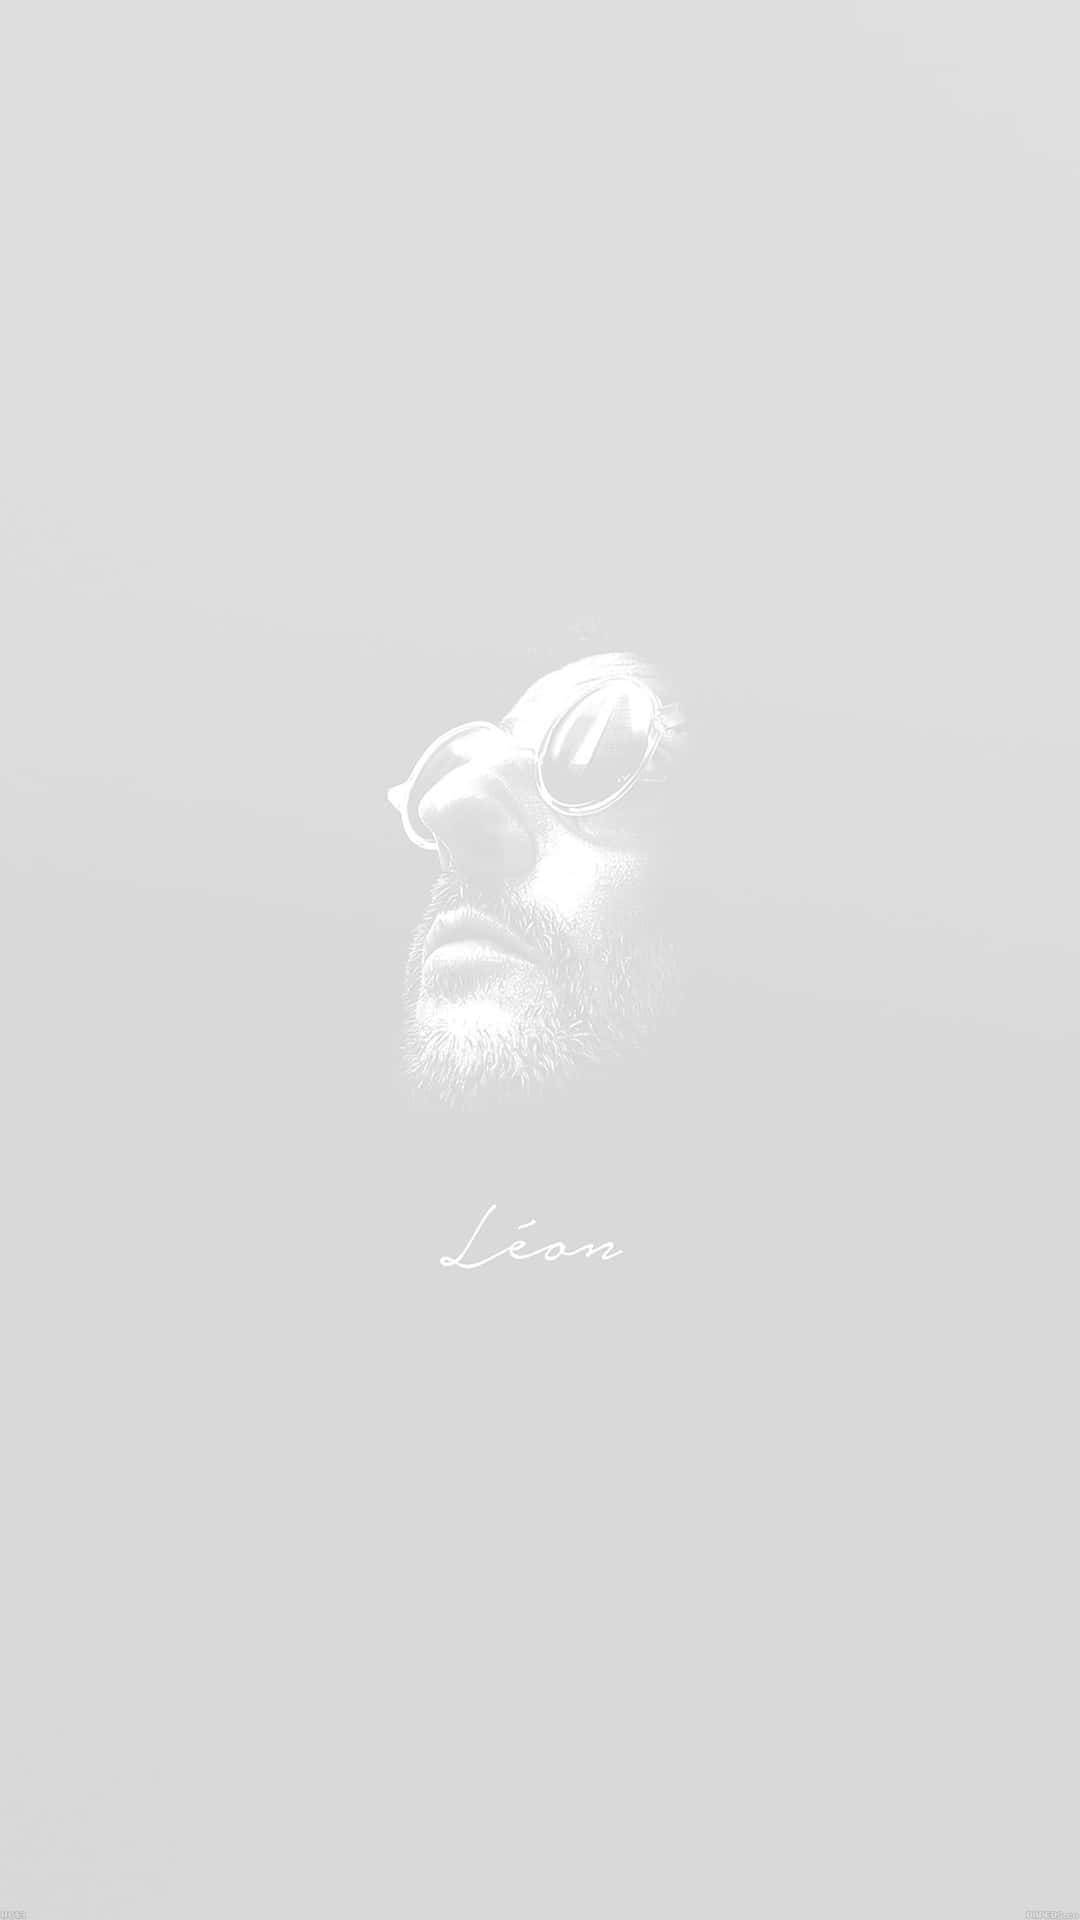 Sätten Vit Minimalistisk Lennon-bild Som Bakgrundsbild På Din Iphone. Wallpaper